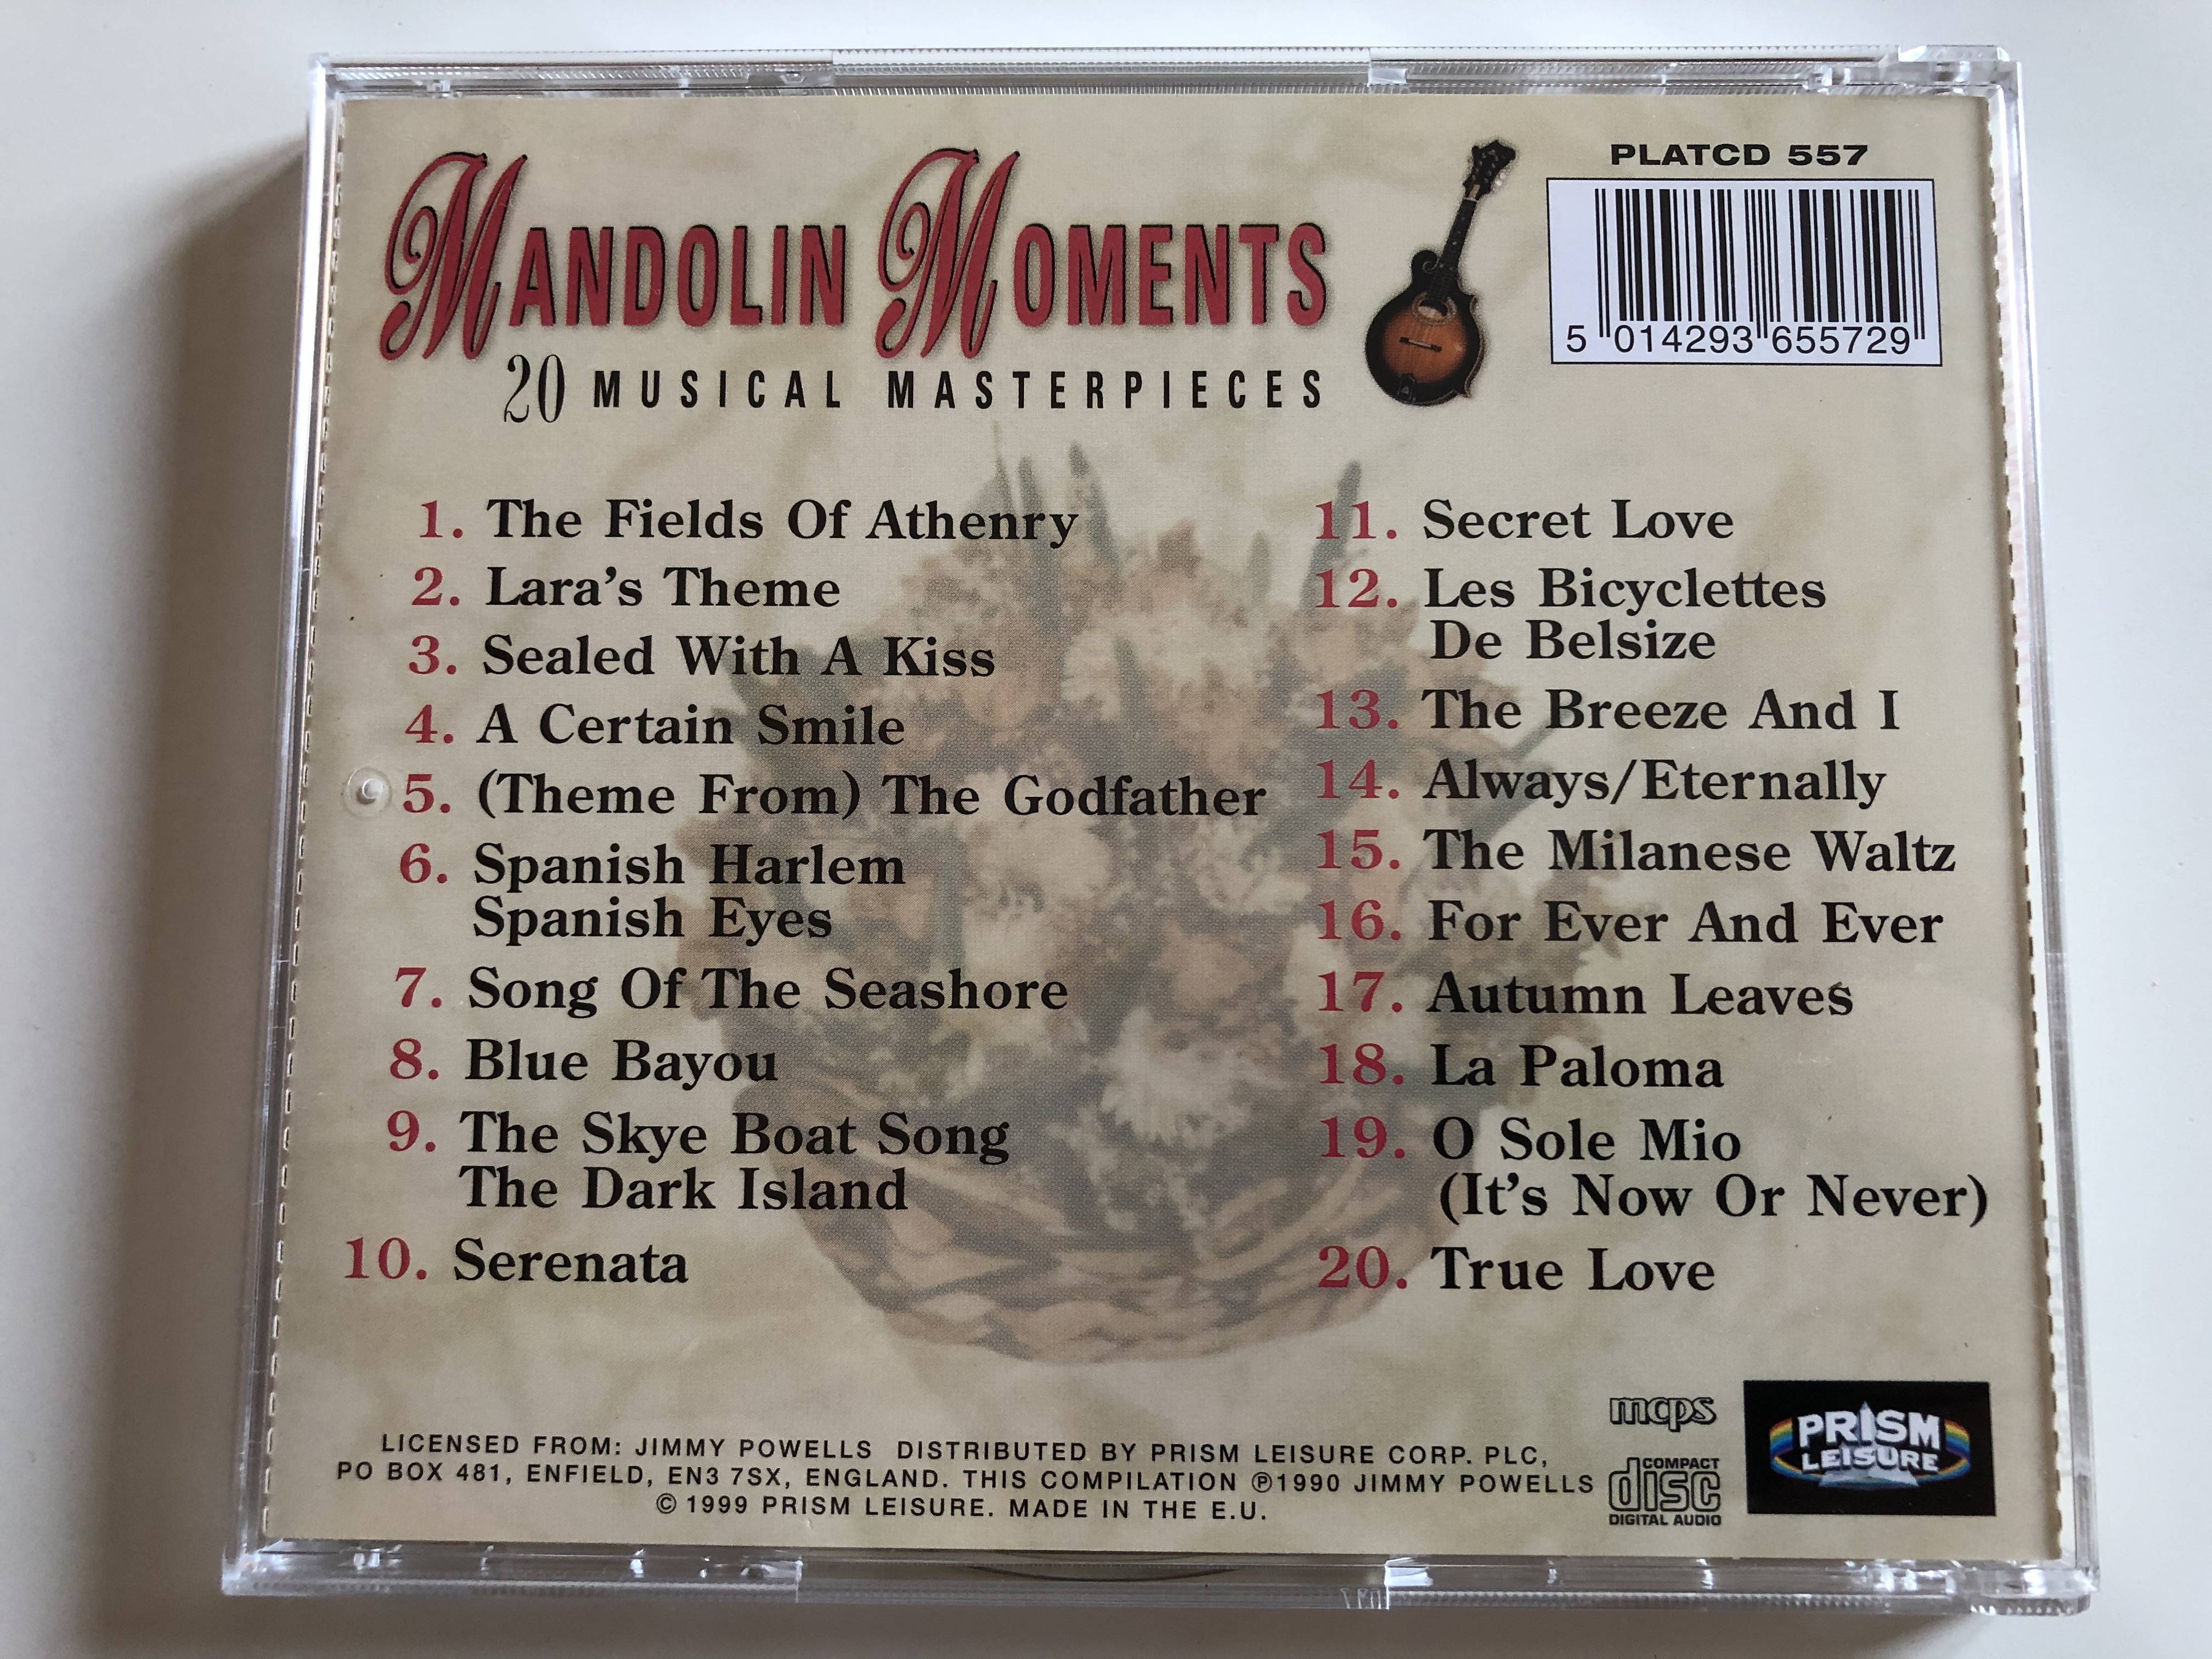 mandolin-moments-20-musical-masterpieces-prism-leisure-audio-cd-1999-platcd-557-5-.jpg